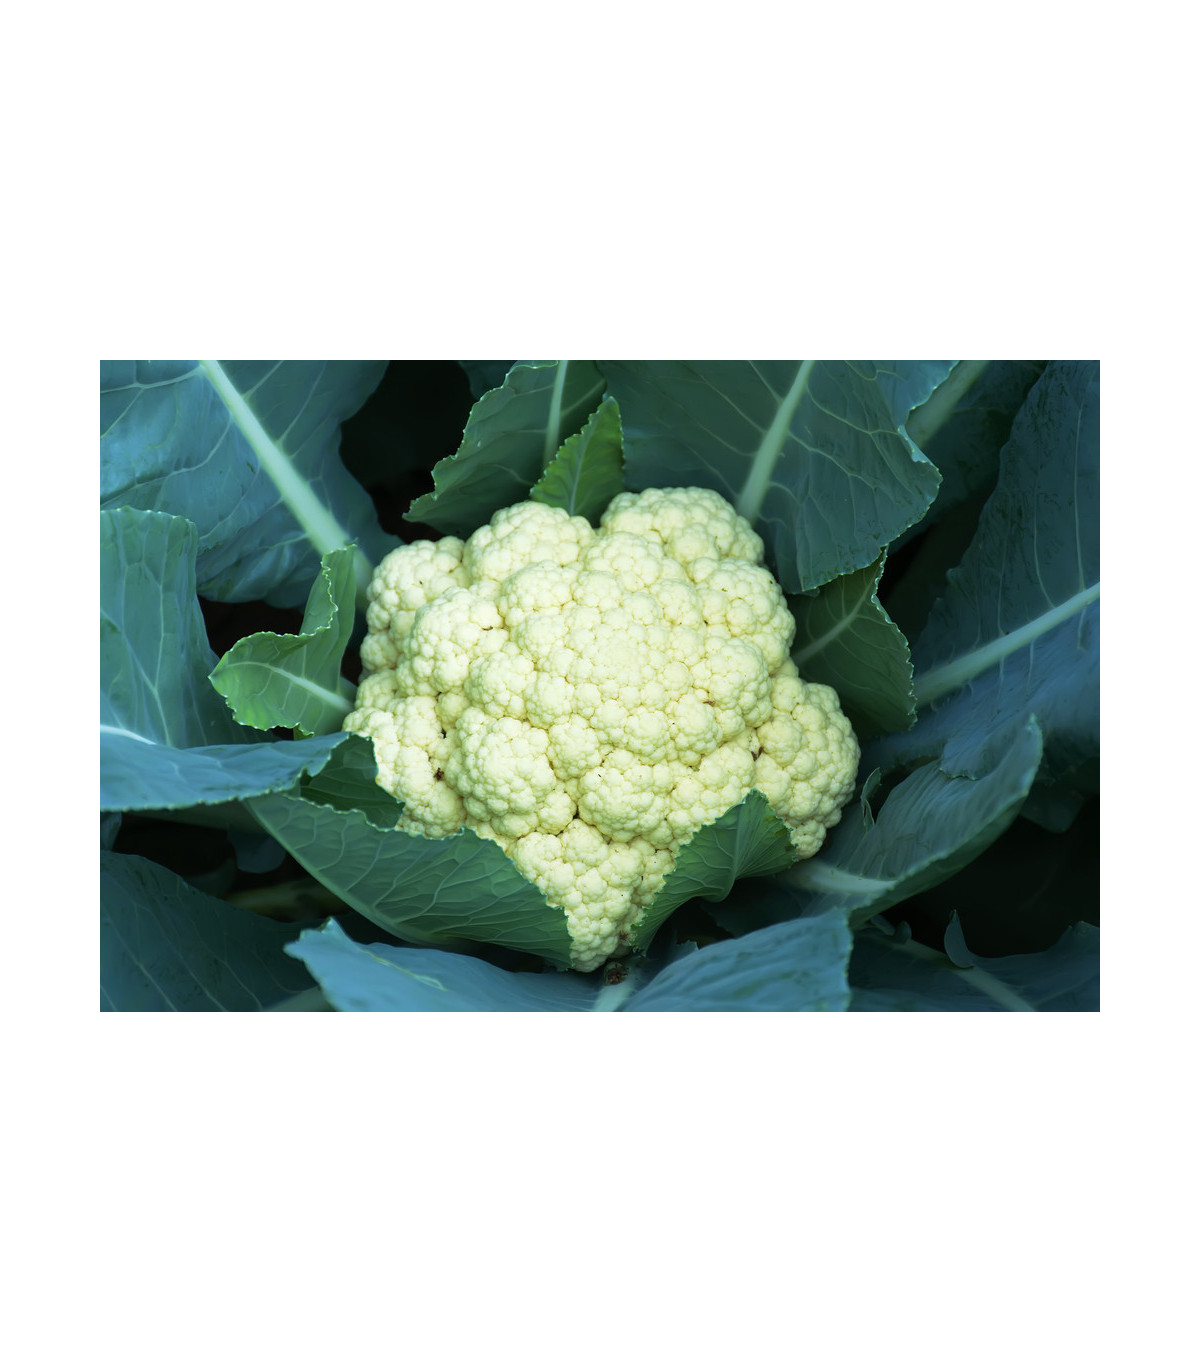 Karfiol neskorý Romanesco - Brassica oleracea botrytis - semená karfiolu - 20 ks